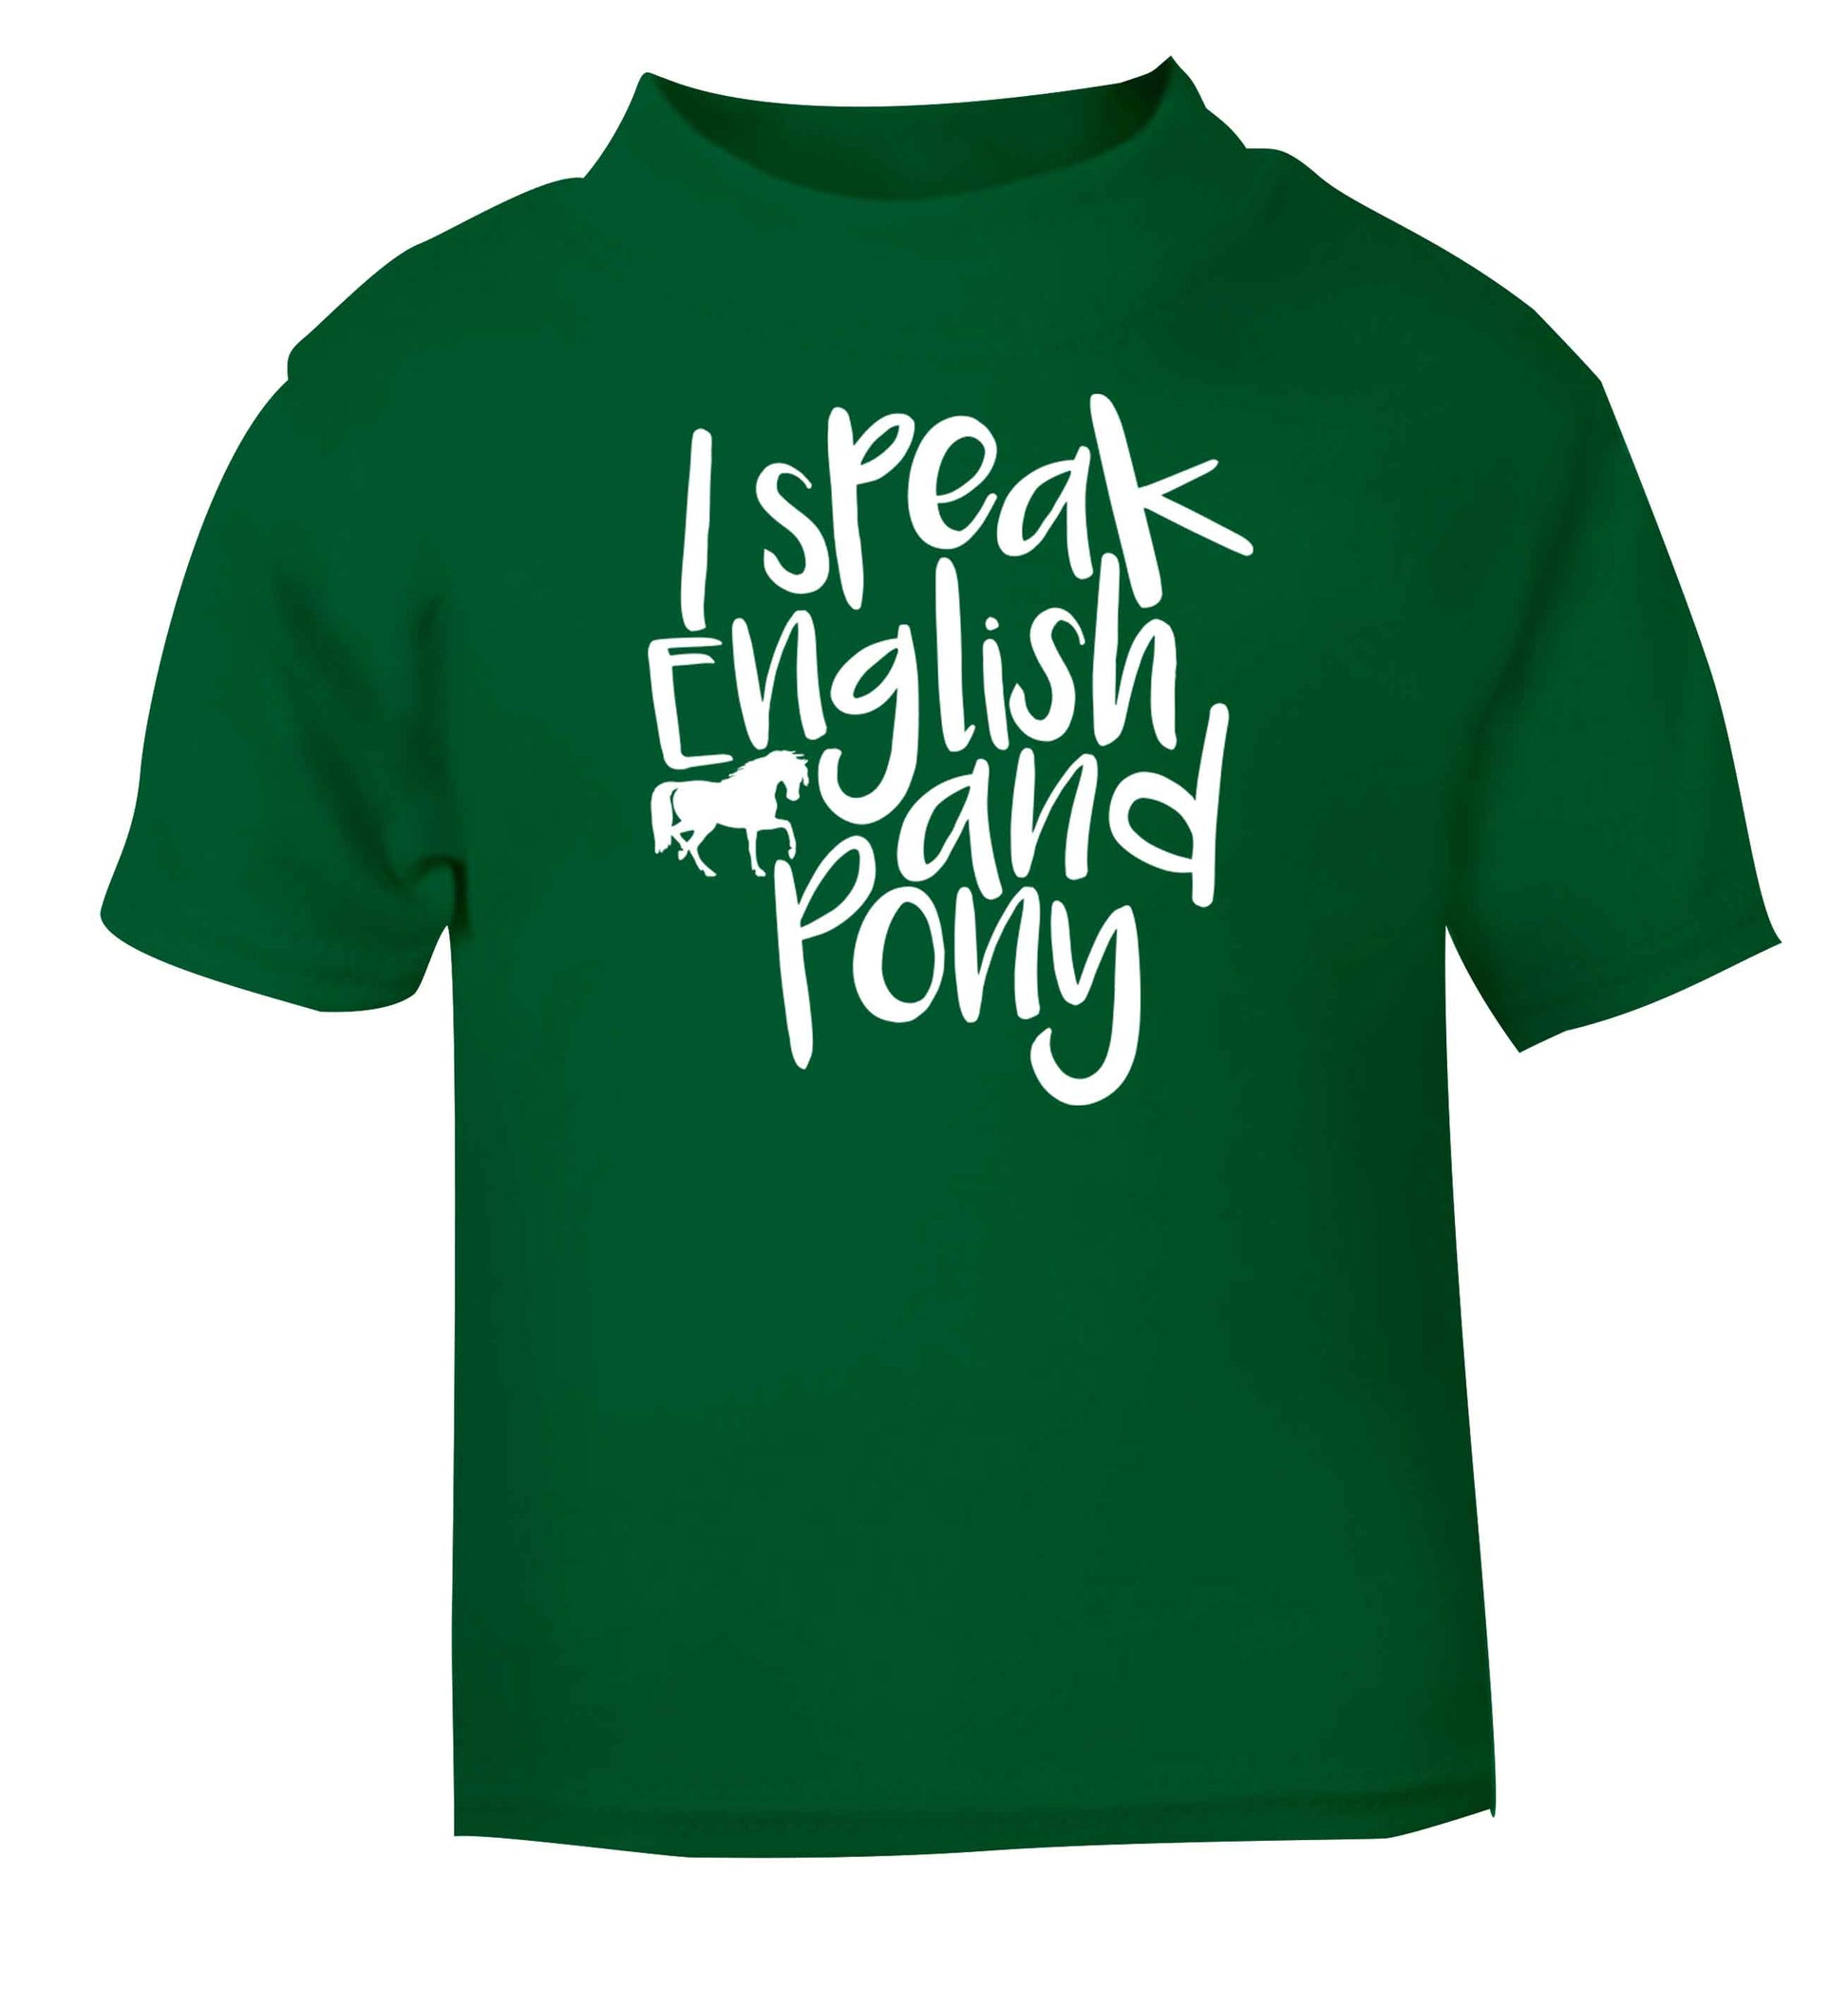 I speak English and pony green baby toddler Tshirt 2 Years